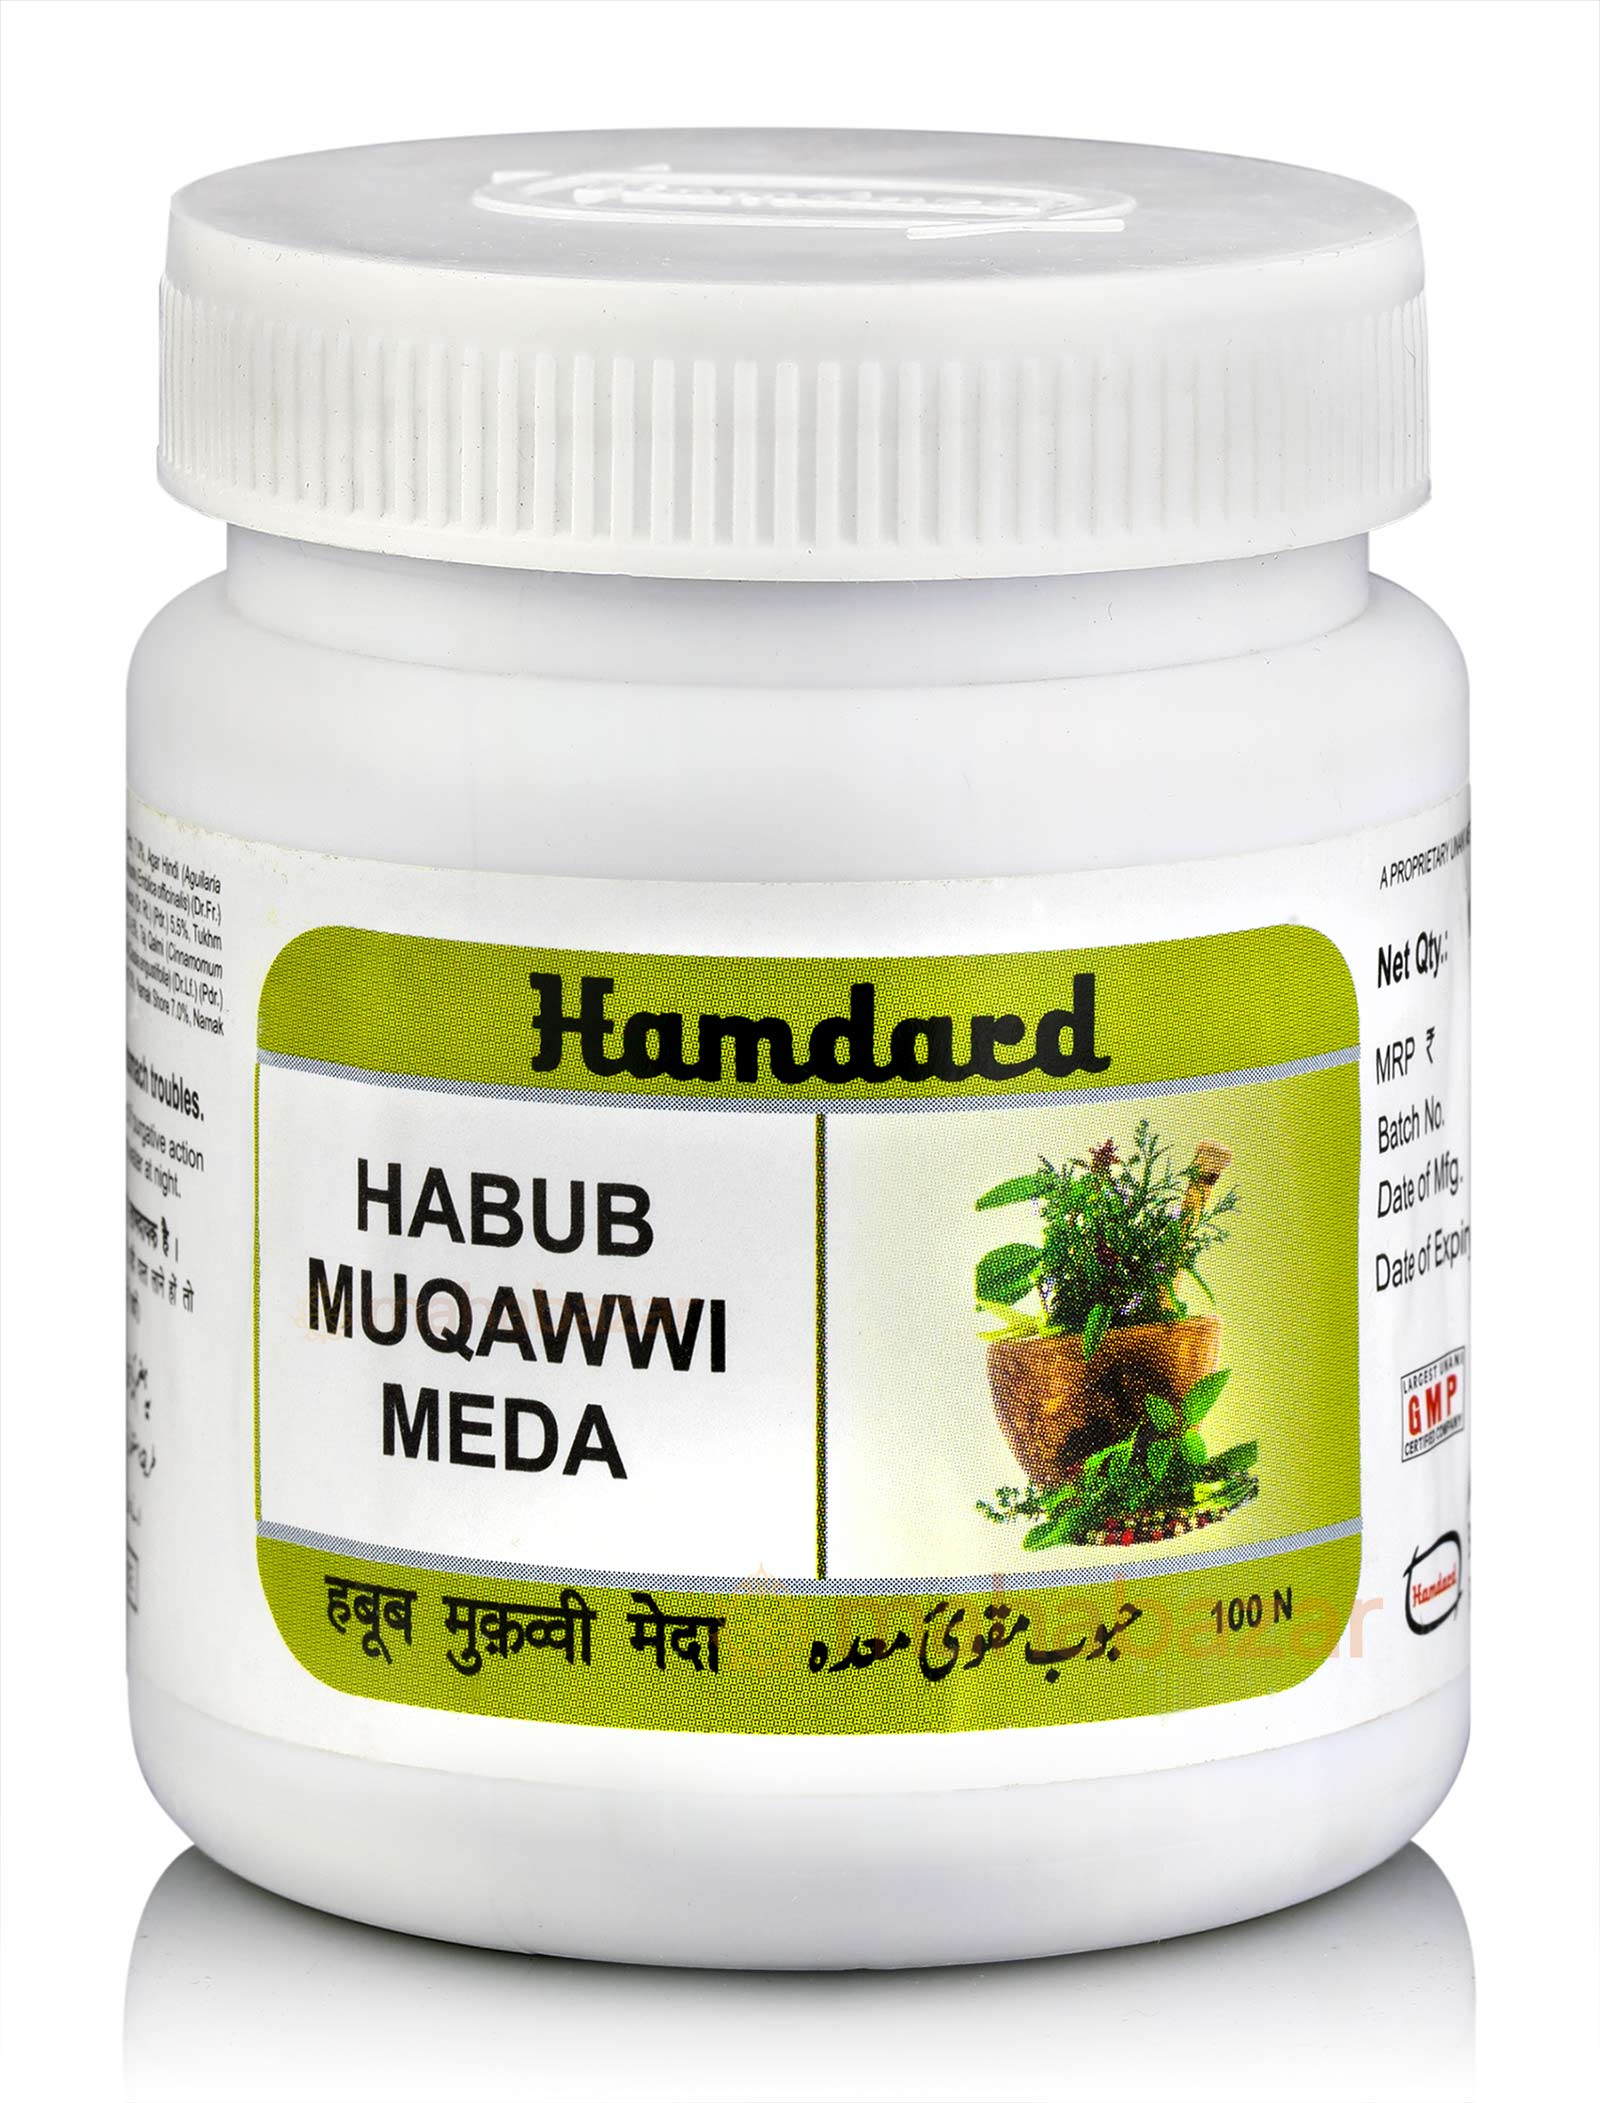 https://healthygk.com/wp-content/uploads/2023/04/Hamdard-Habub-Muqawwi-Meda.jpg